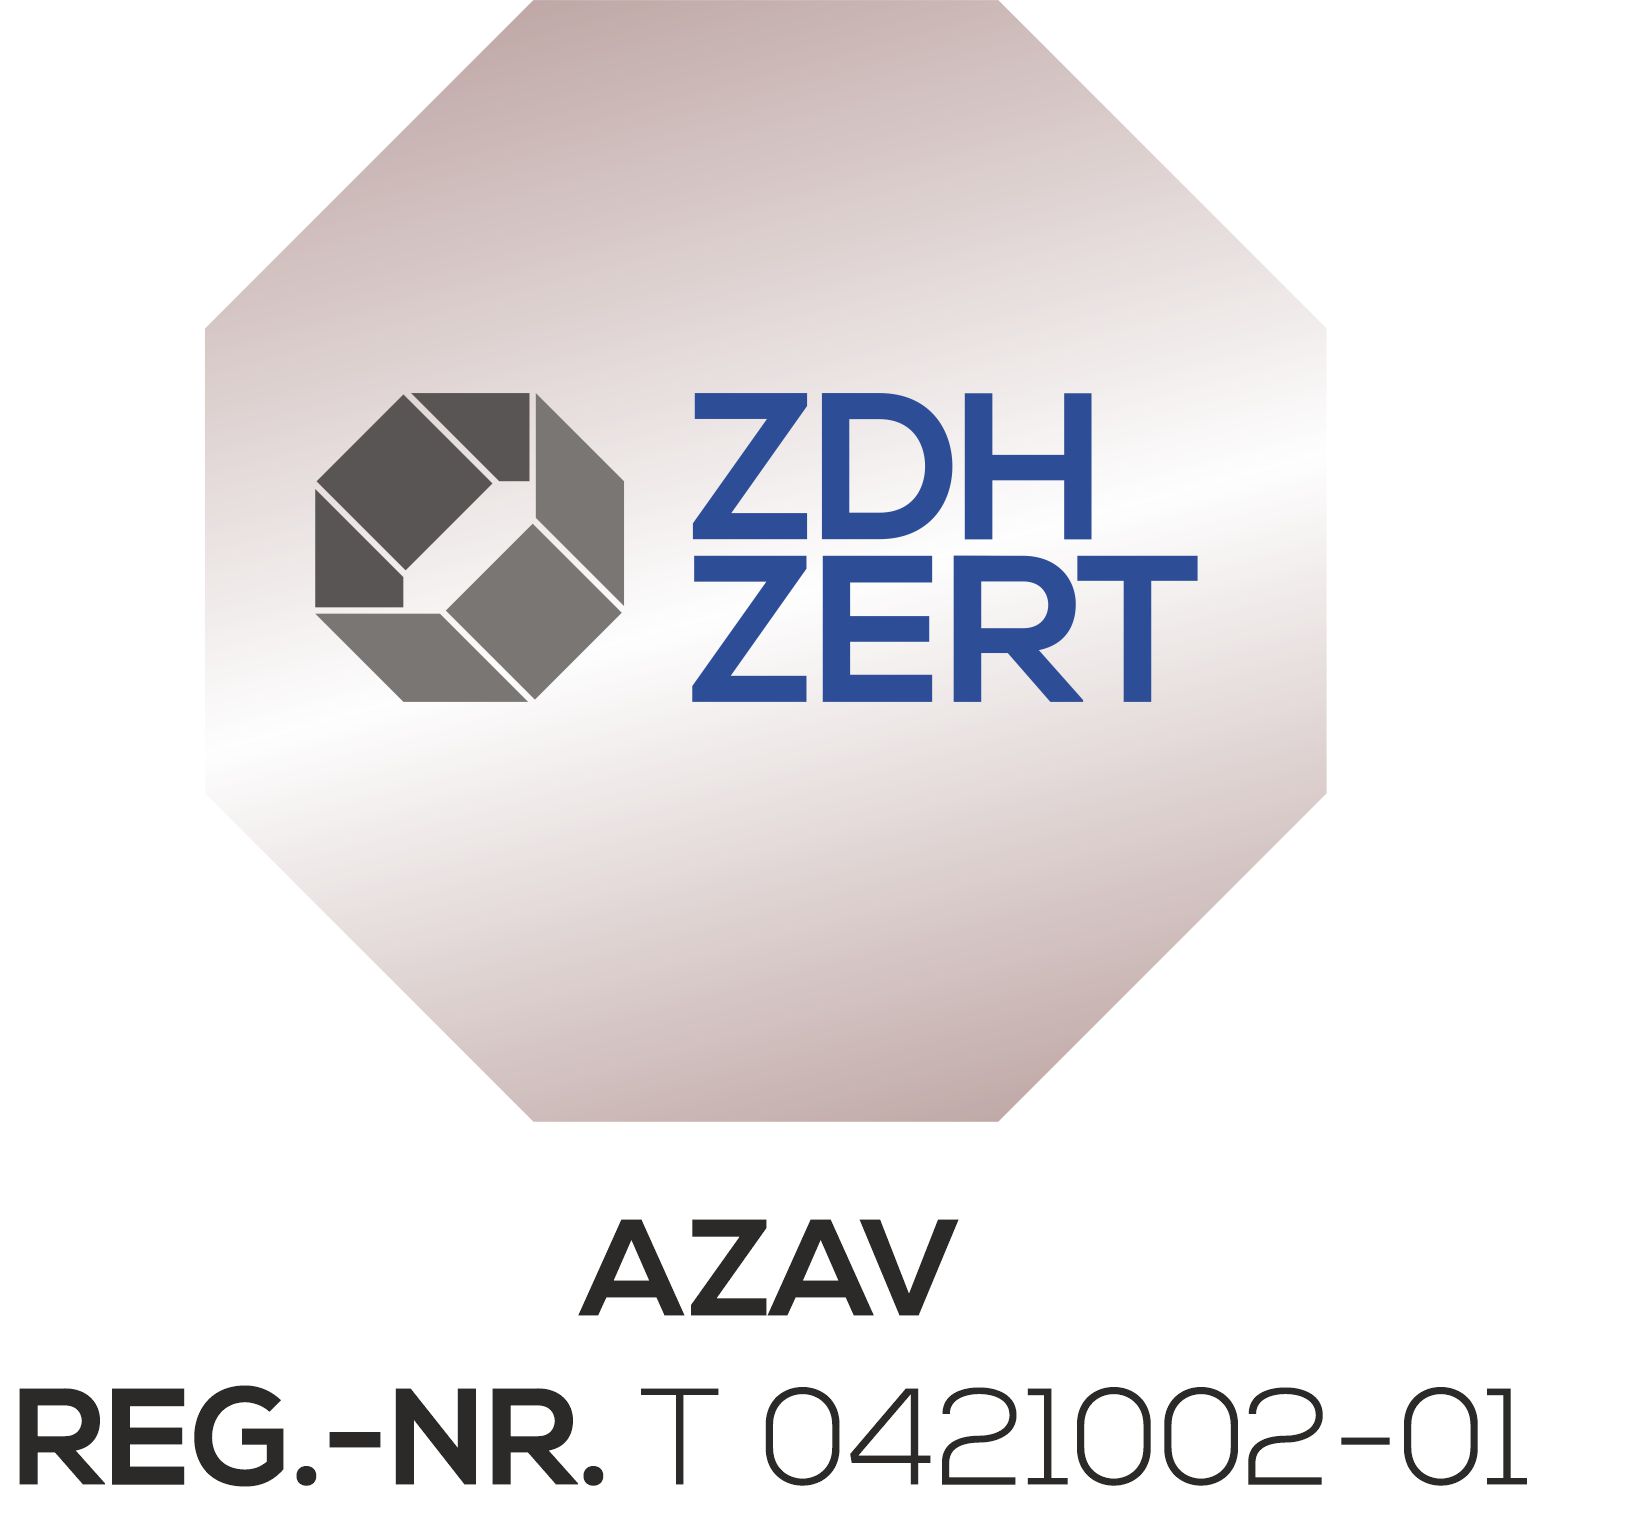 ZDH-ZERT - AZAV